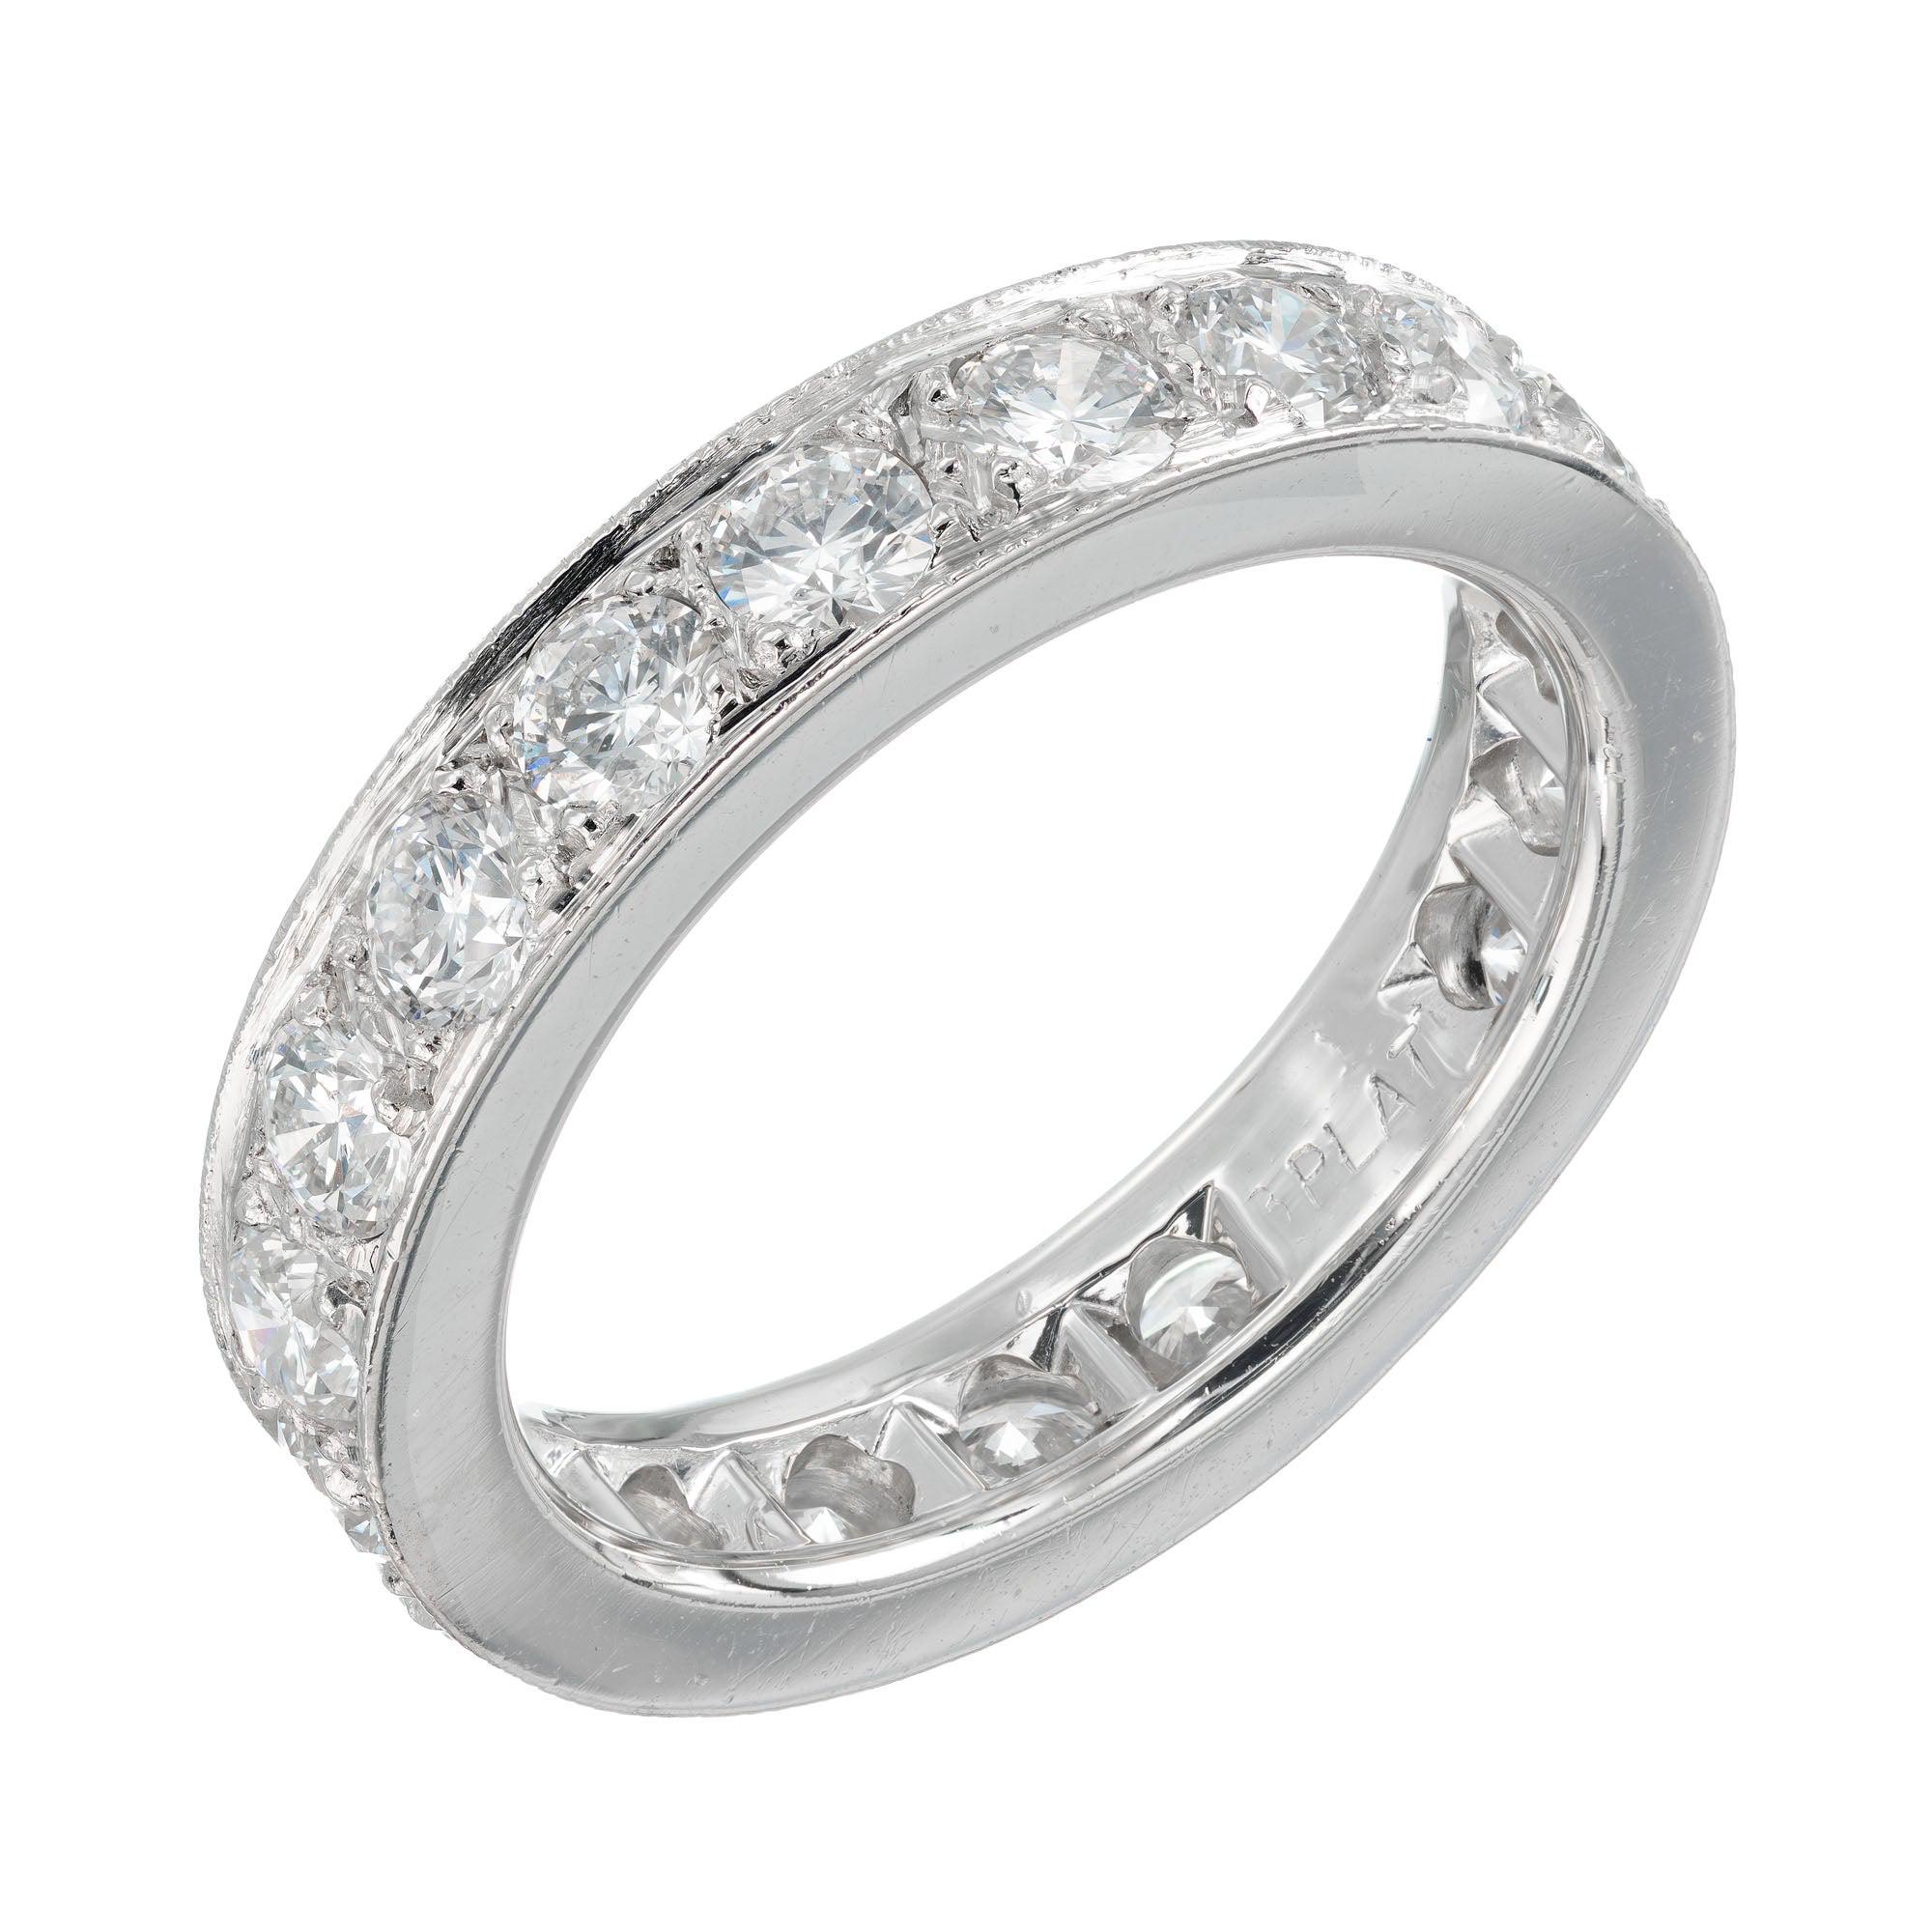 Peter Suchy 2.25 Carat Diamond Bead Set Eternity Wedding Band Platinum Ring